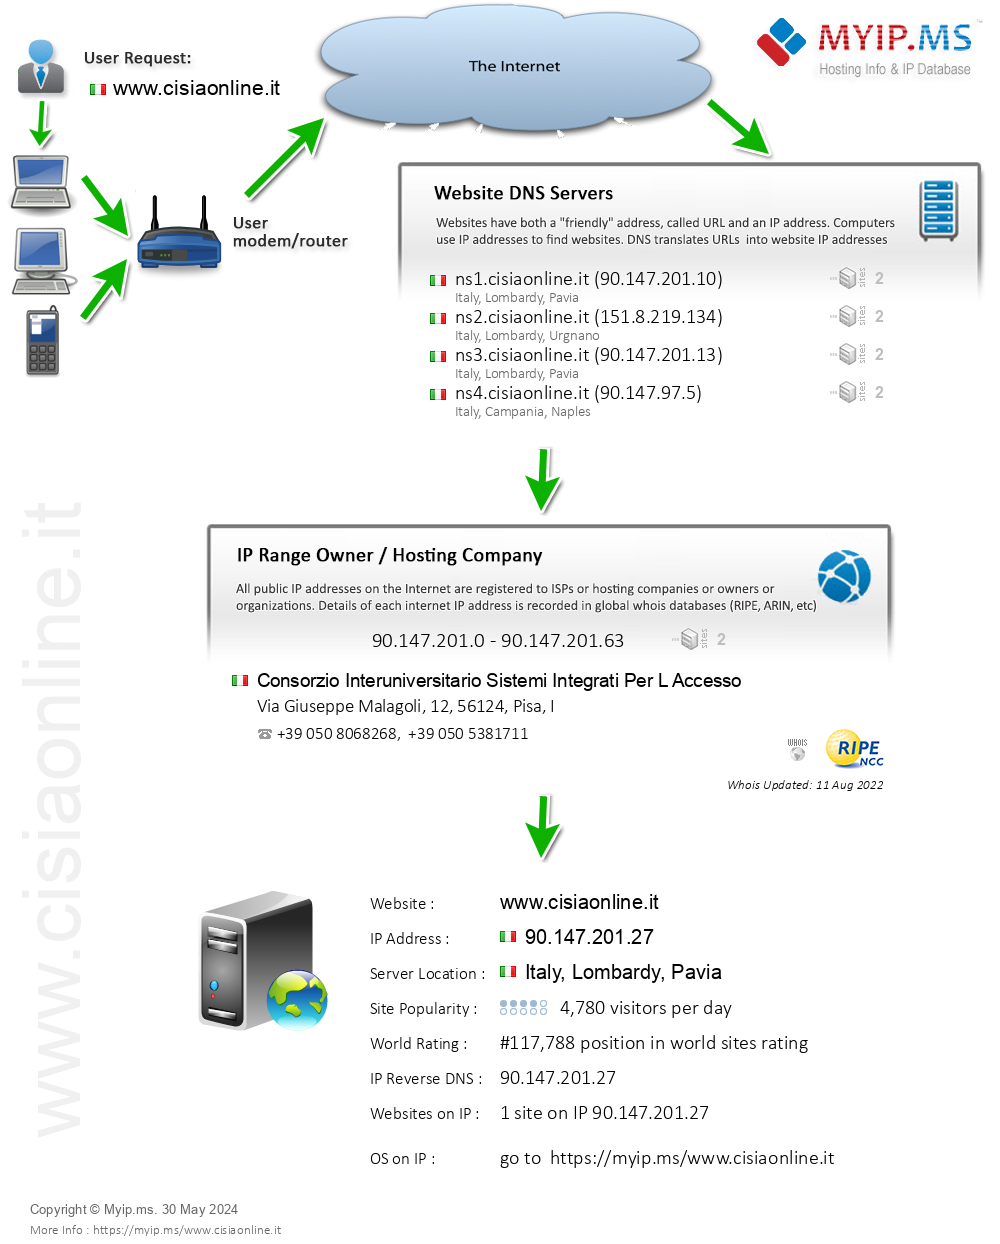 Cisiaonline.it - Website Hosting Visual IP Diagram